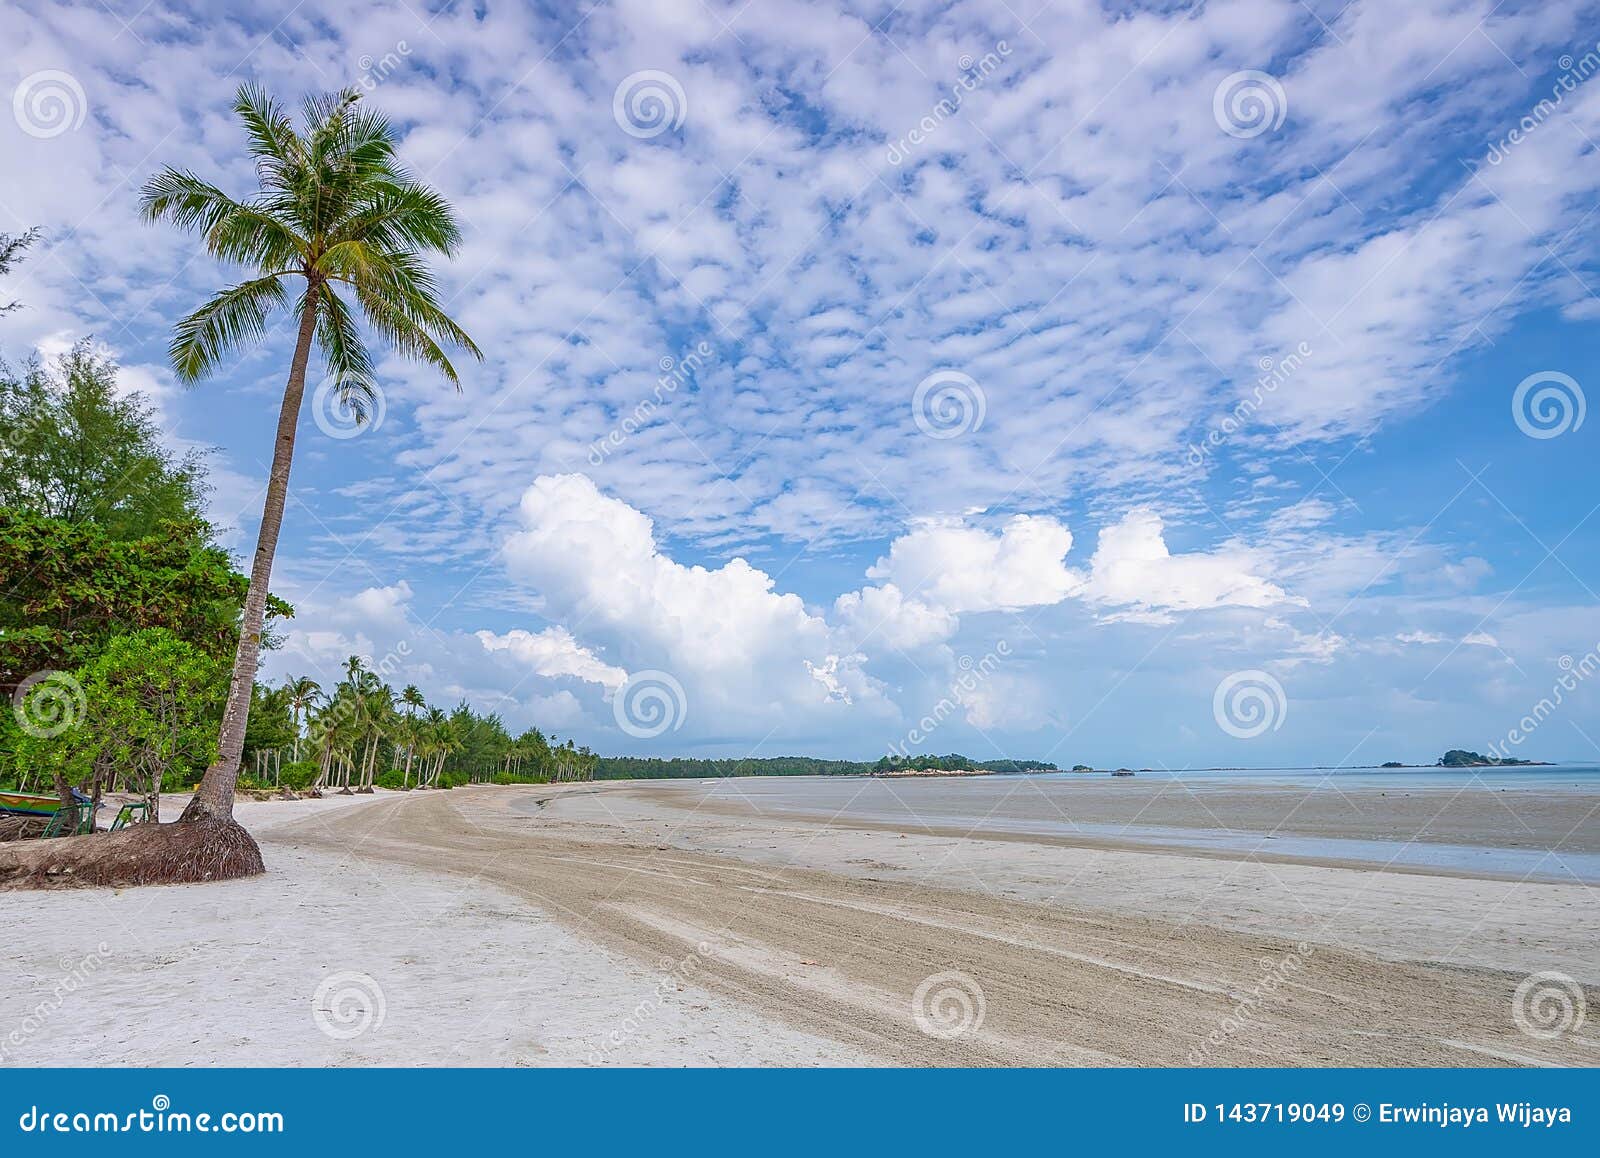 wonderful beach view at batam bintan indonesia